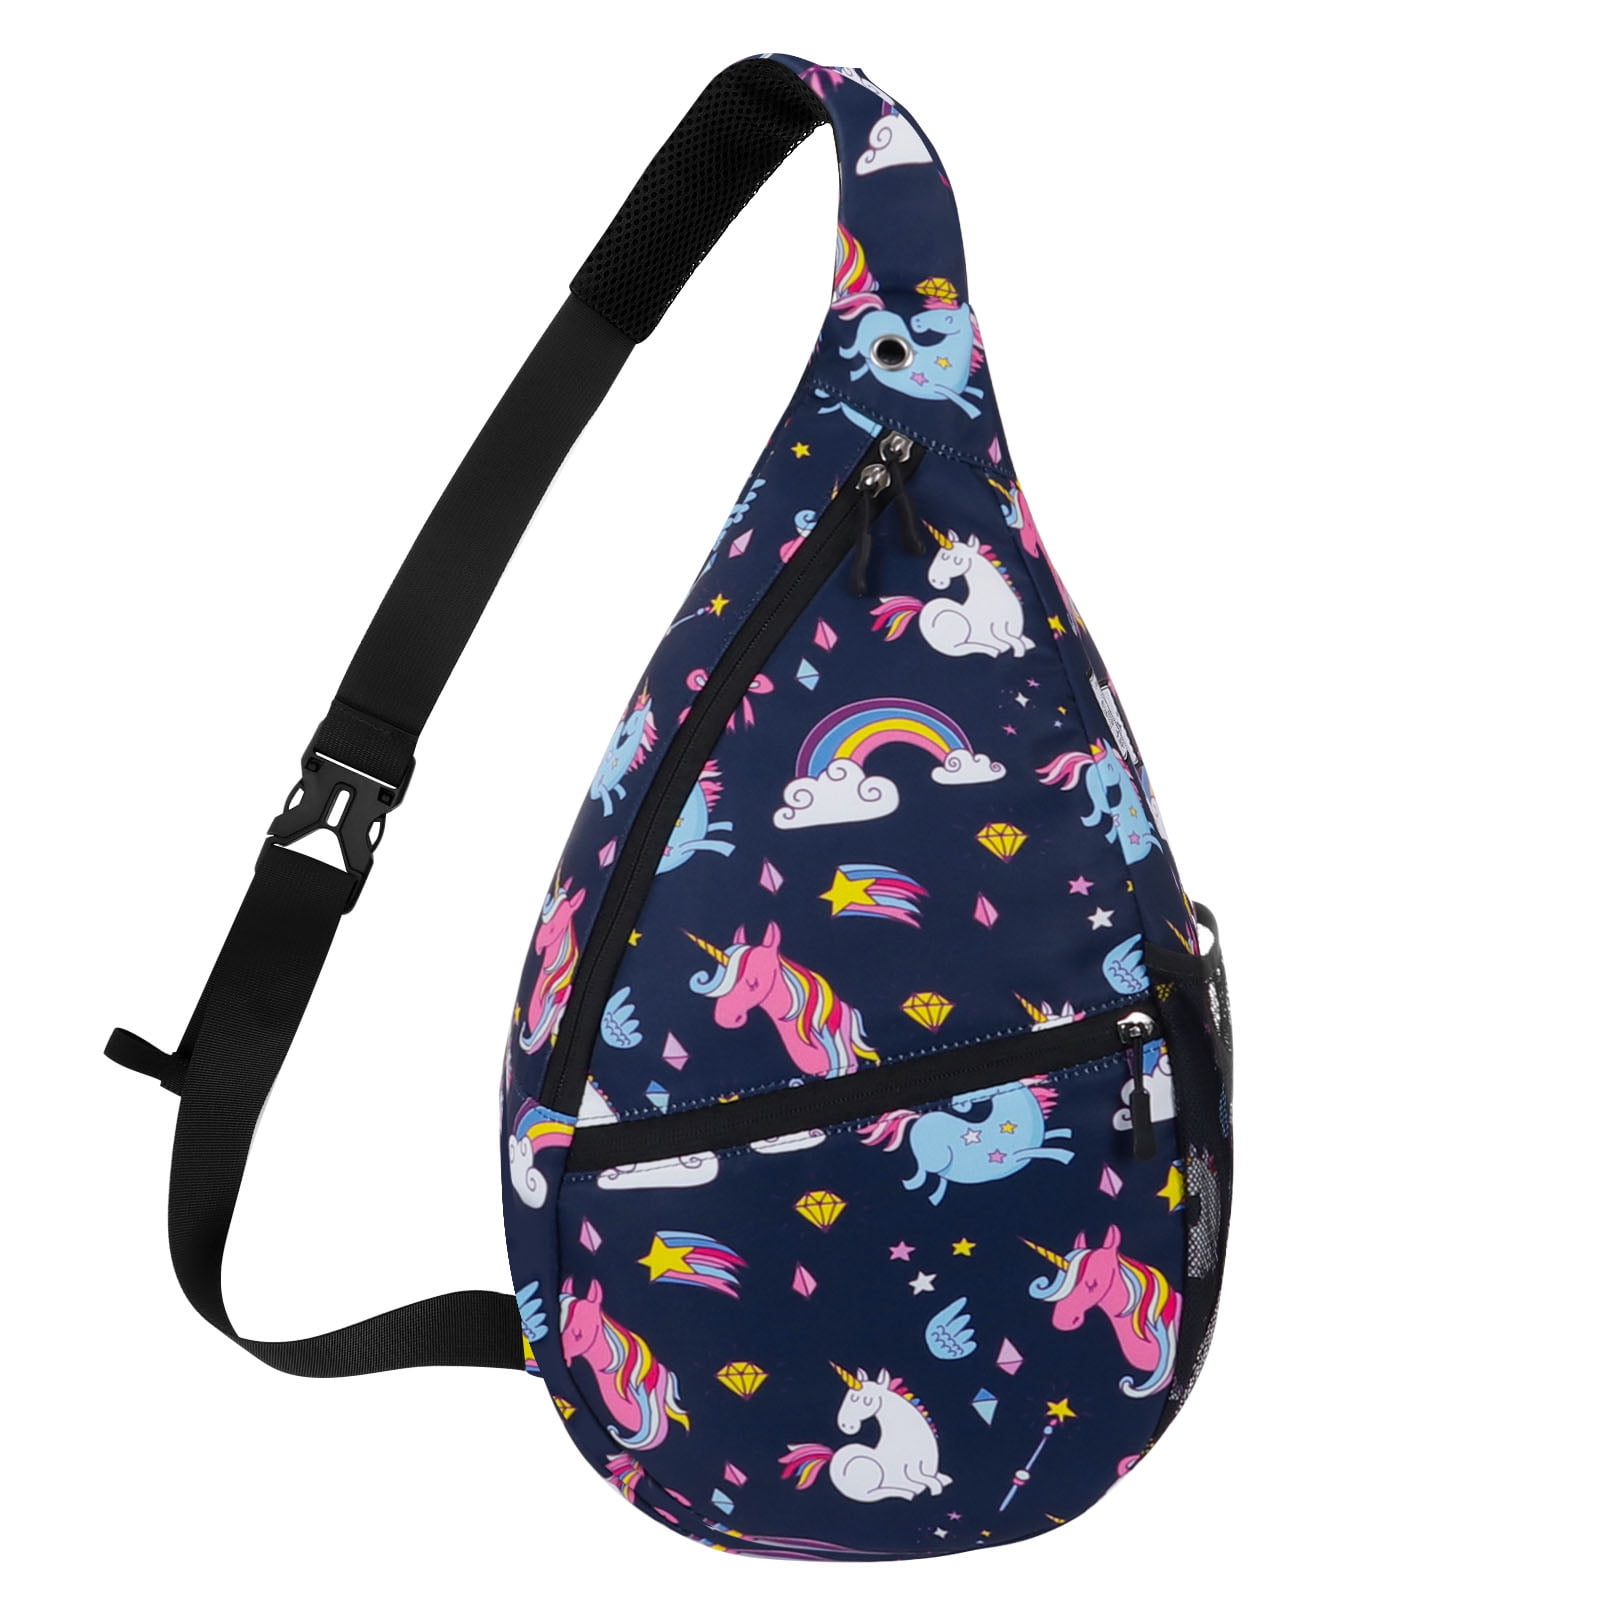 Waterfly Sling Backpack Sling Bag Crossbody Daypack Casual Backpack Chest Bag